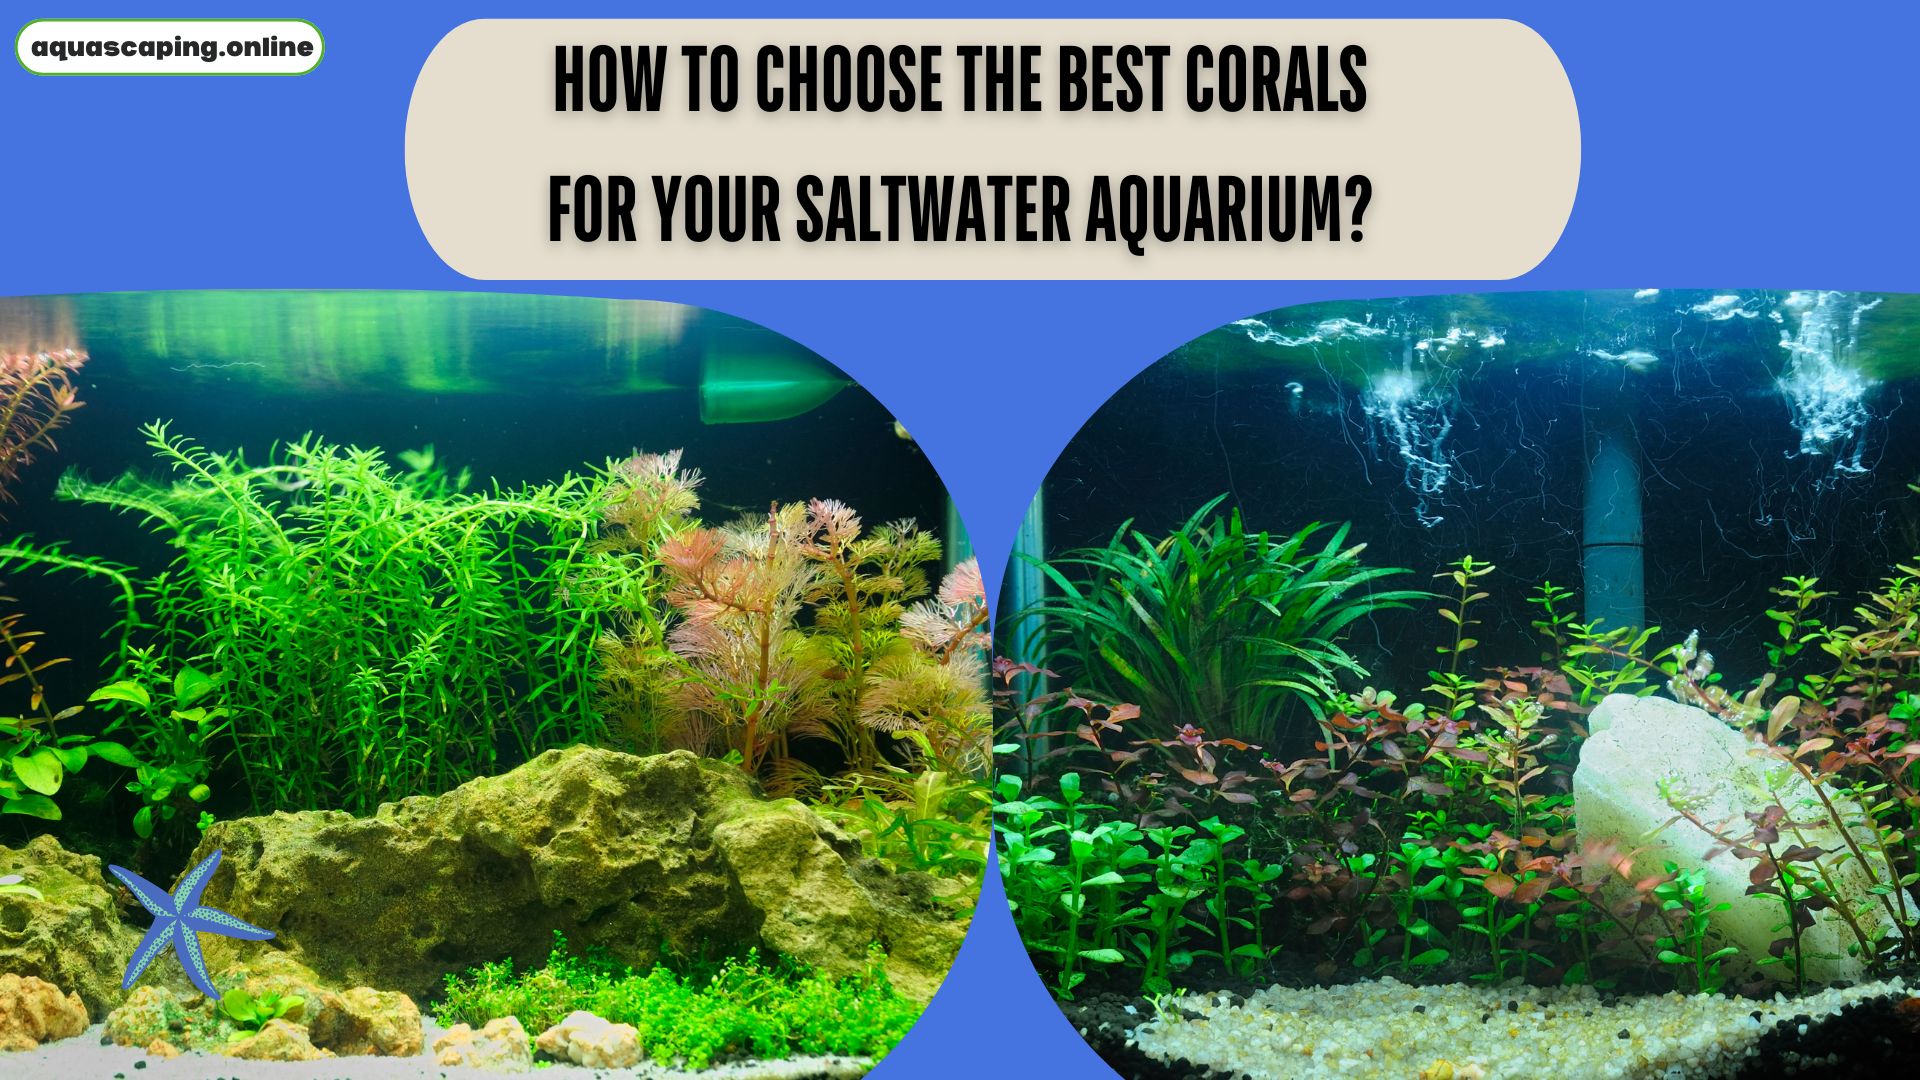 Best corals for your saltwater aquarium